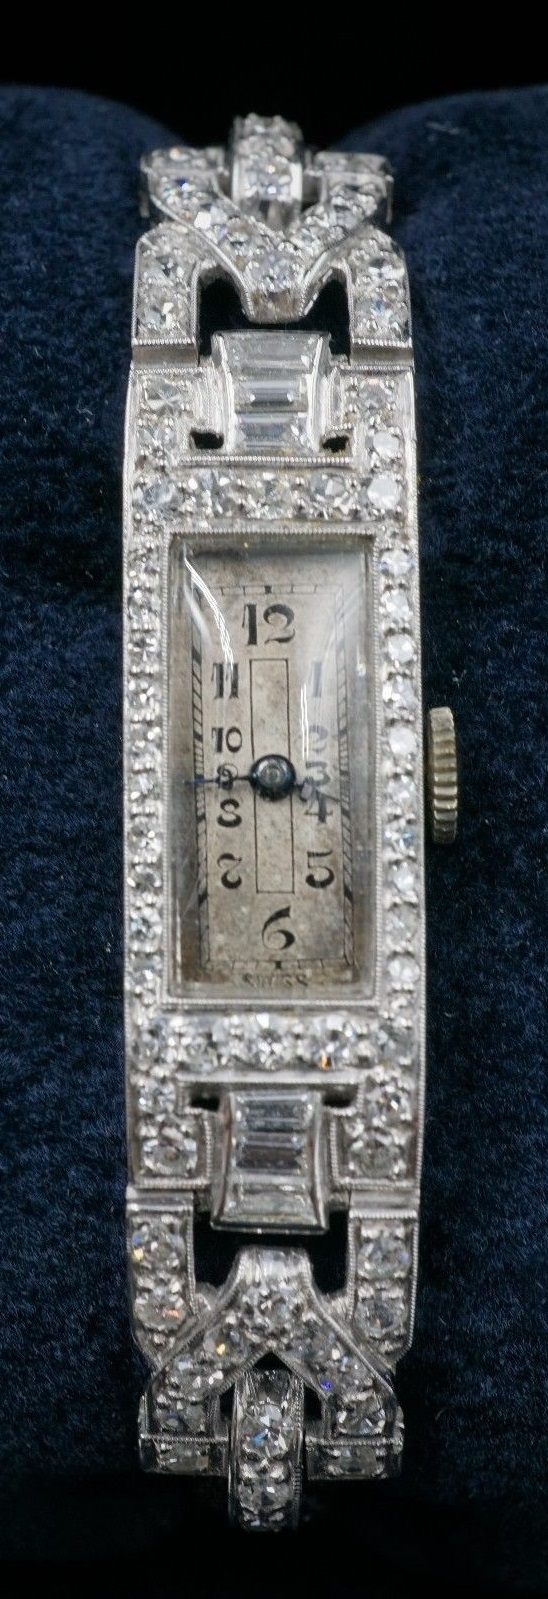 Watch: Edwardian era Rado brand 17 jewel mechanical movement watch with black cord band, fastening with a fold-over locking clasp | 68 diamonds | 1.32 carats | Appraisal: $19,950